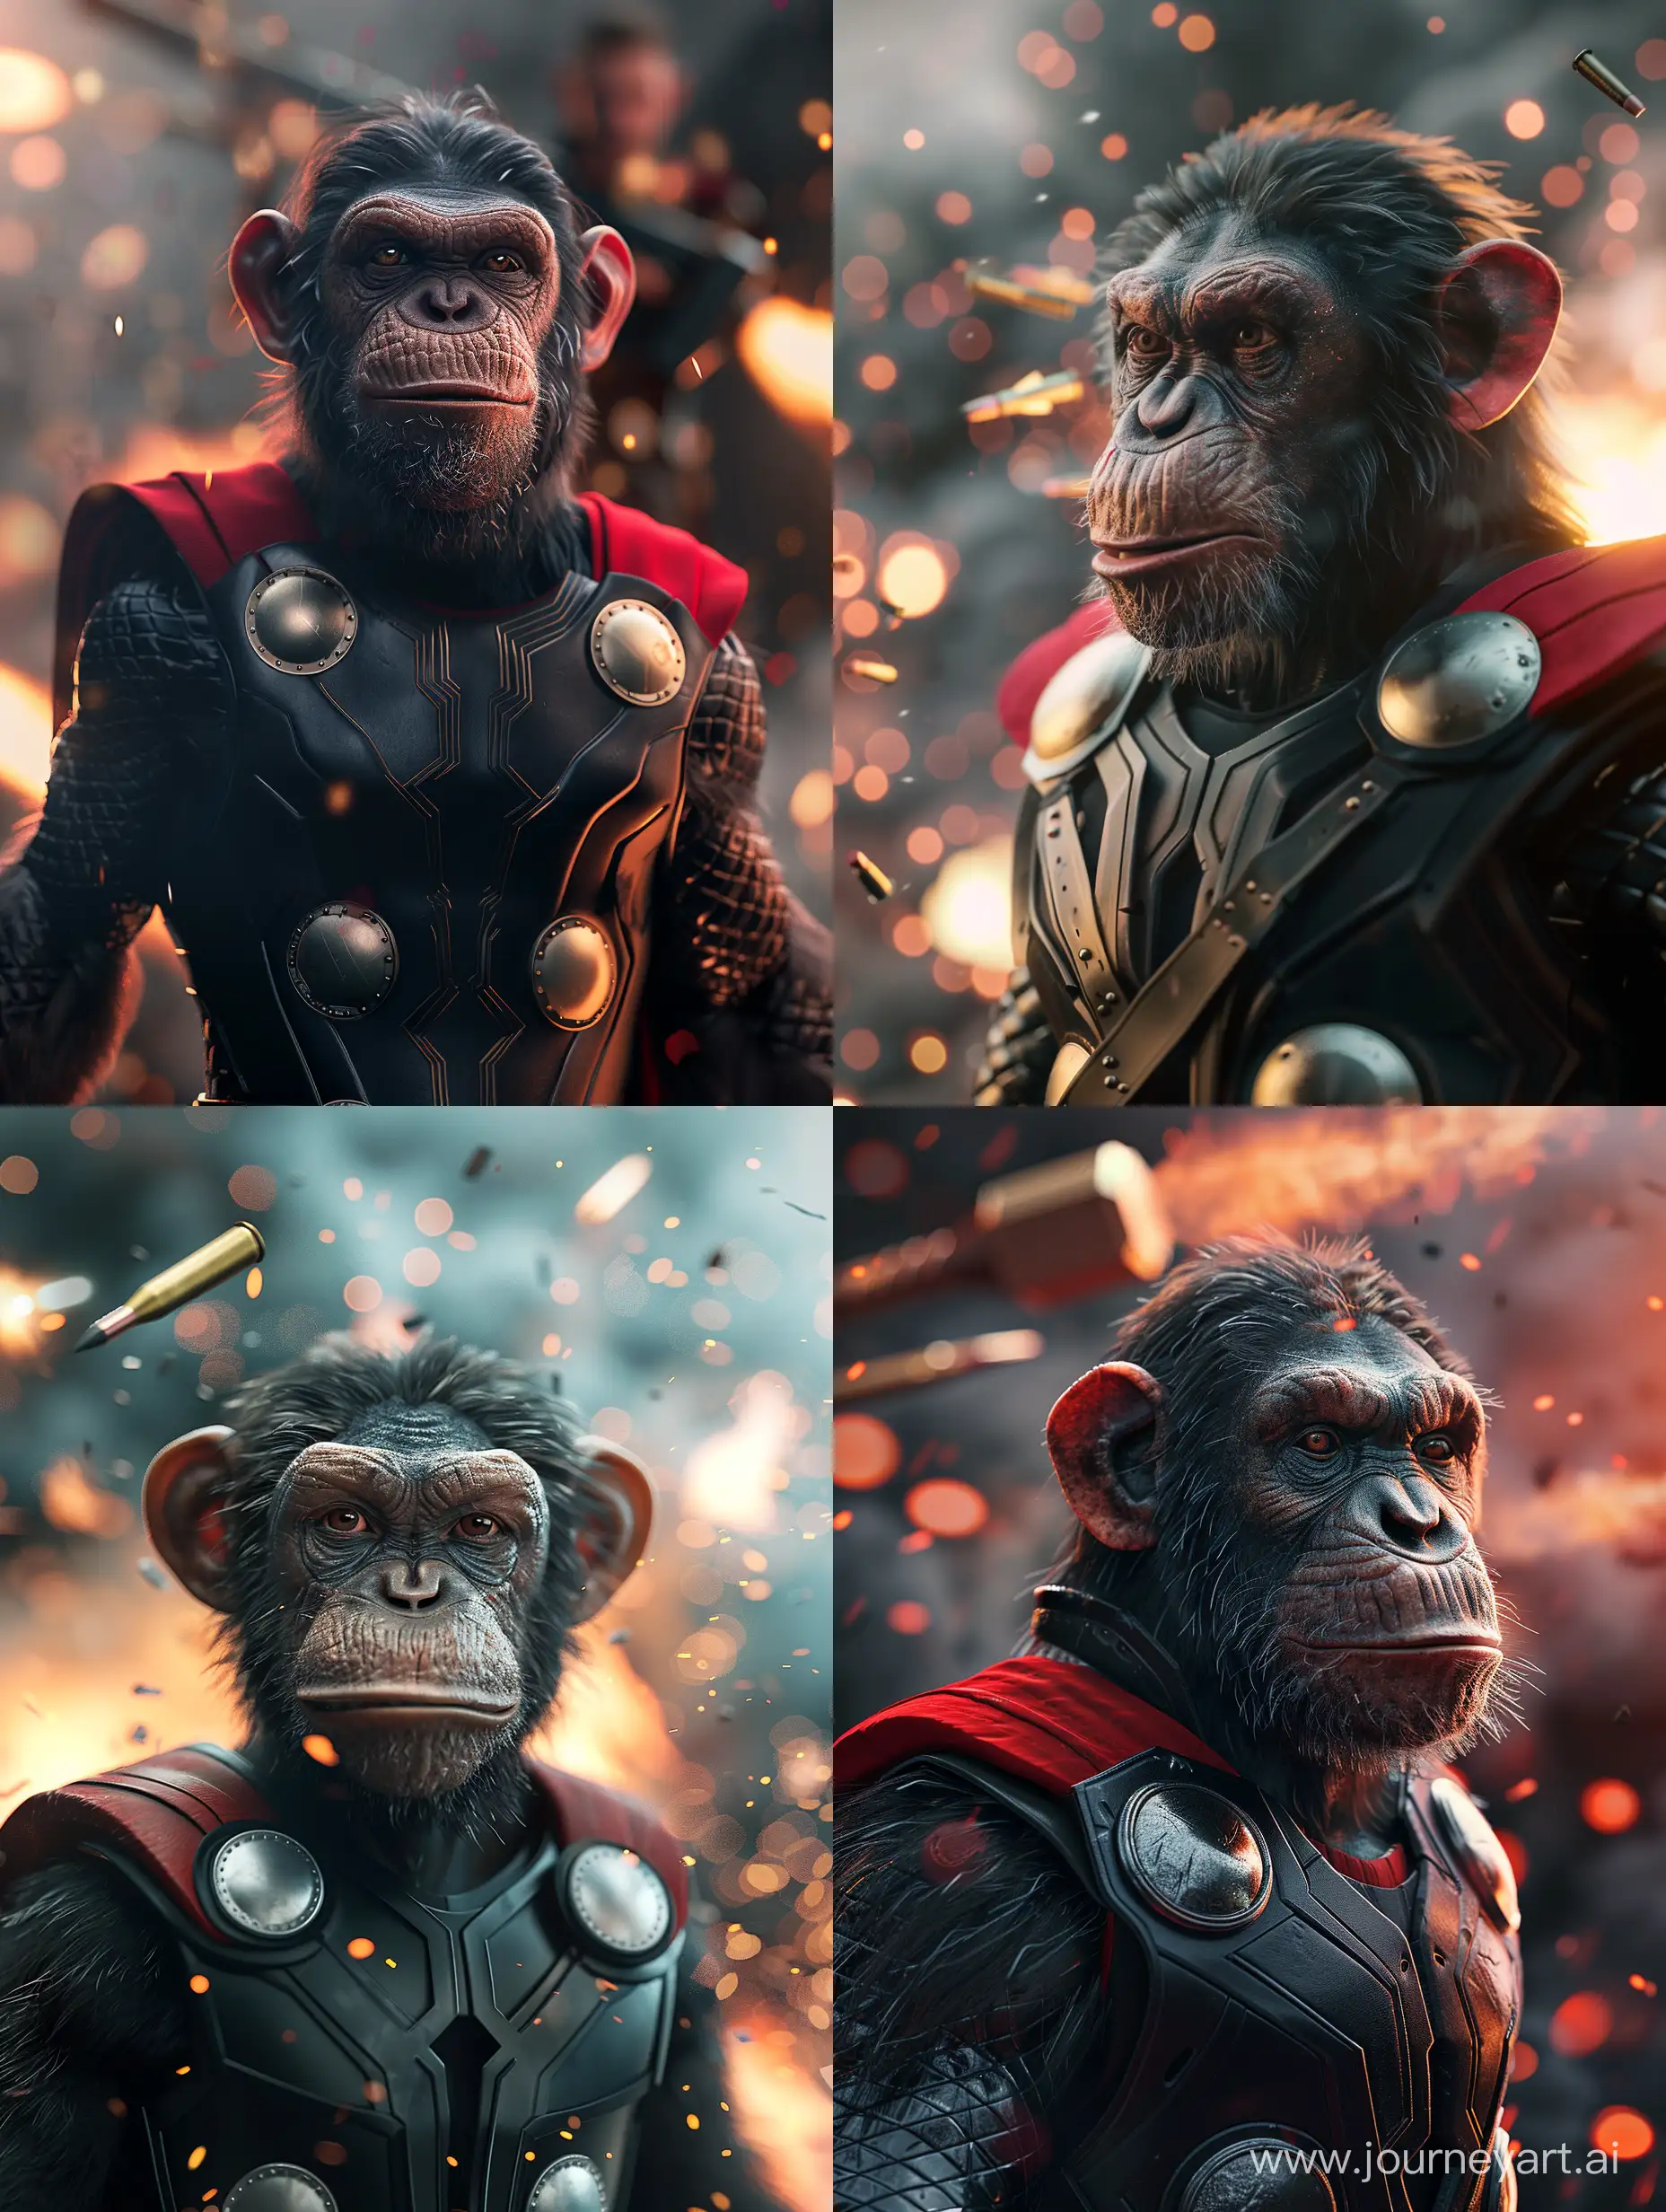 Cinematic-Monster-Monkey-in-Thor-Suit-Unleashing-Lightning-Bolt